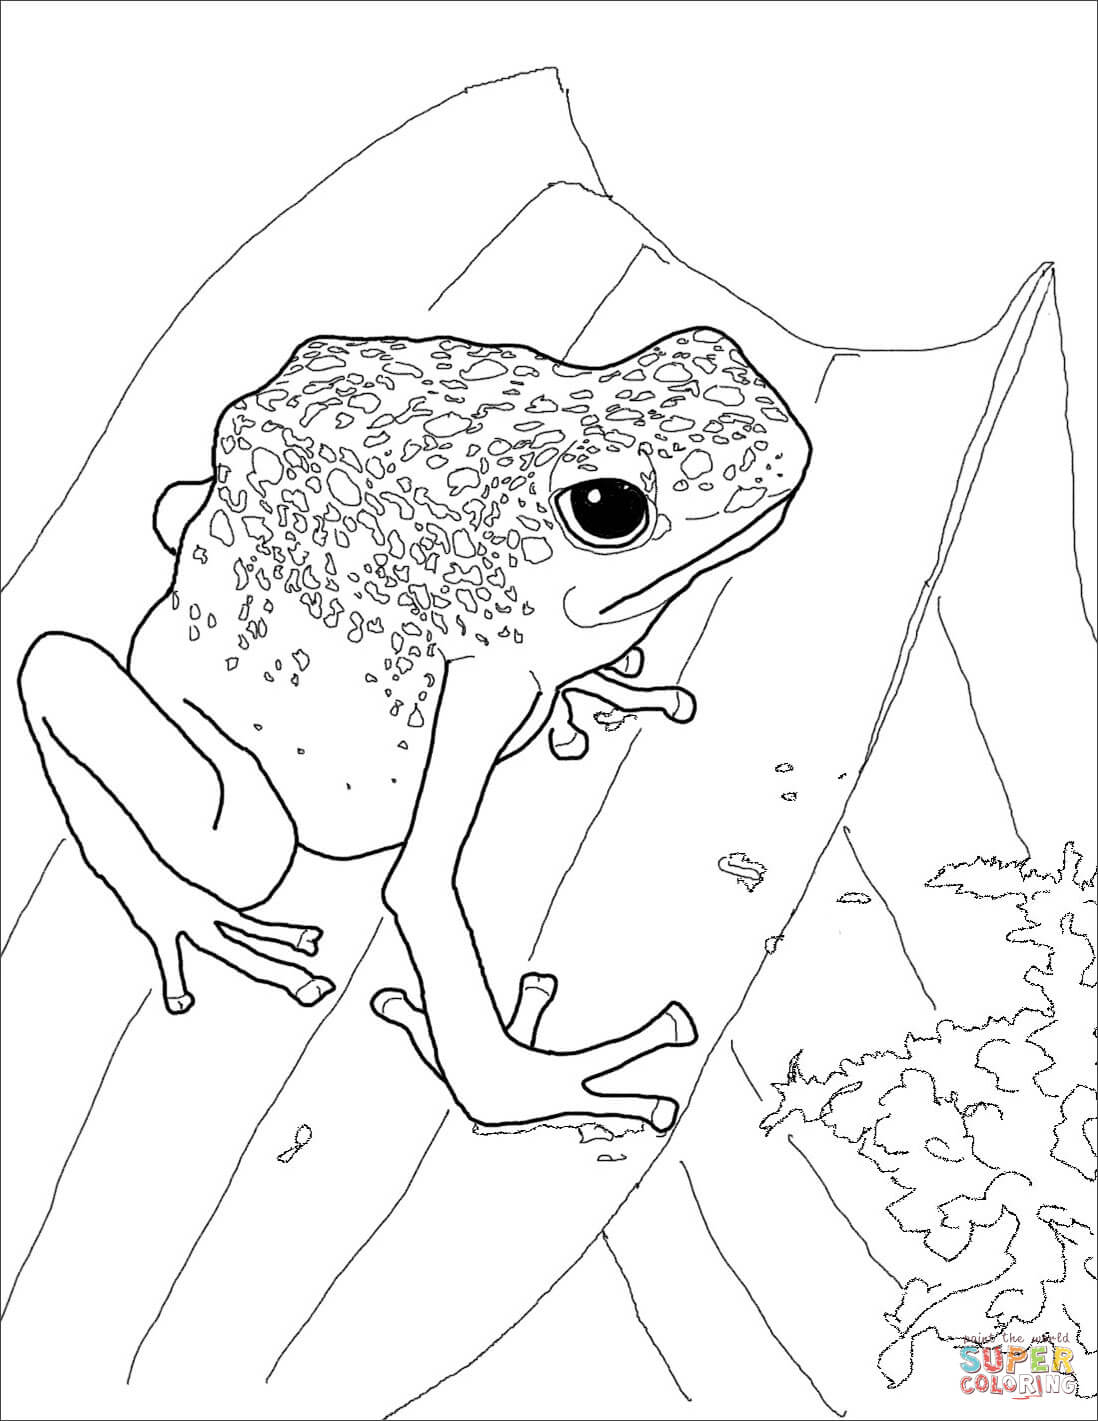 Rainforest Frog Coloring Page Blue Poison Dart Frog Coloring Page Free Printable Coloring Pages